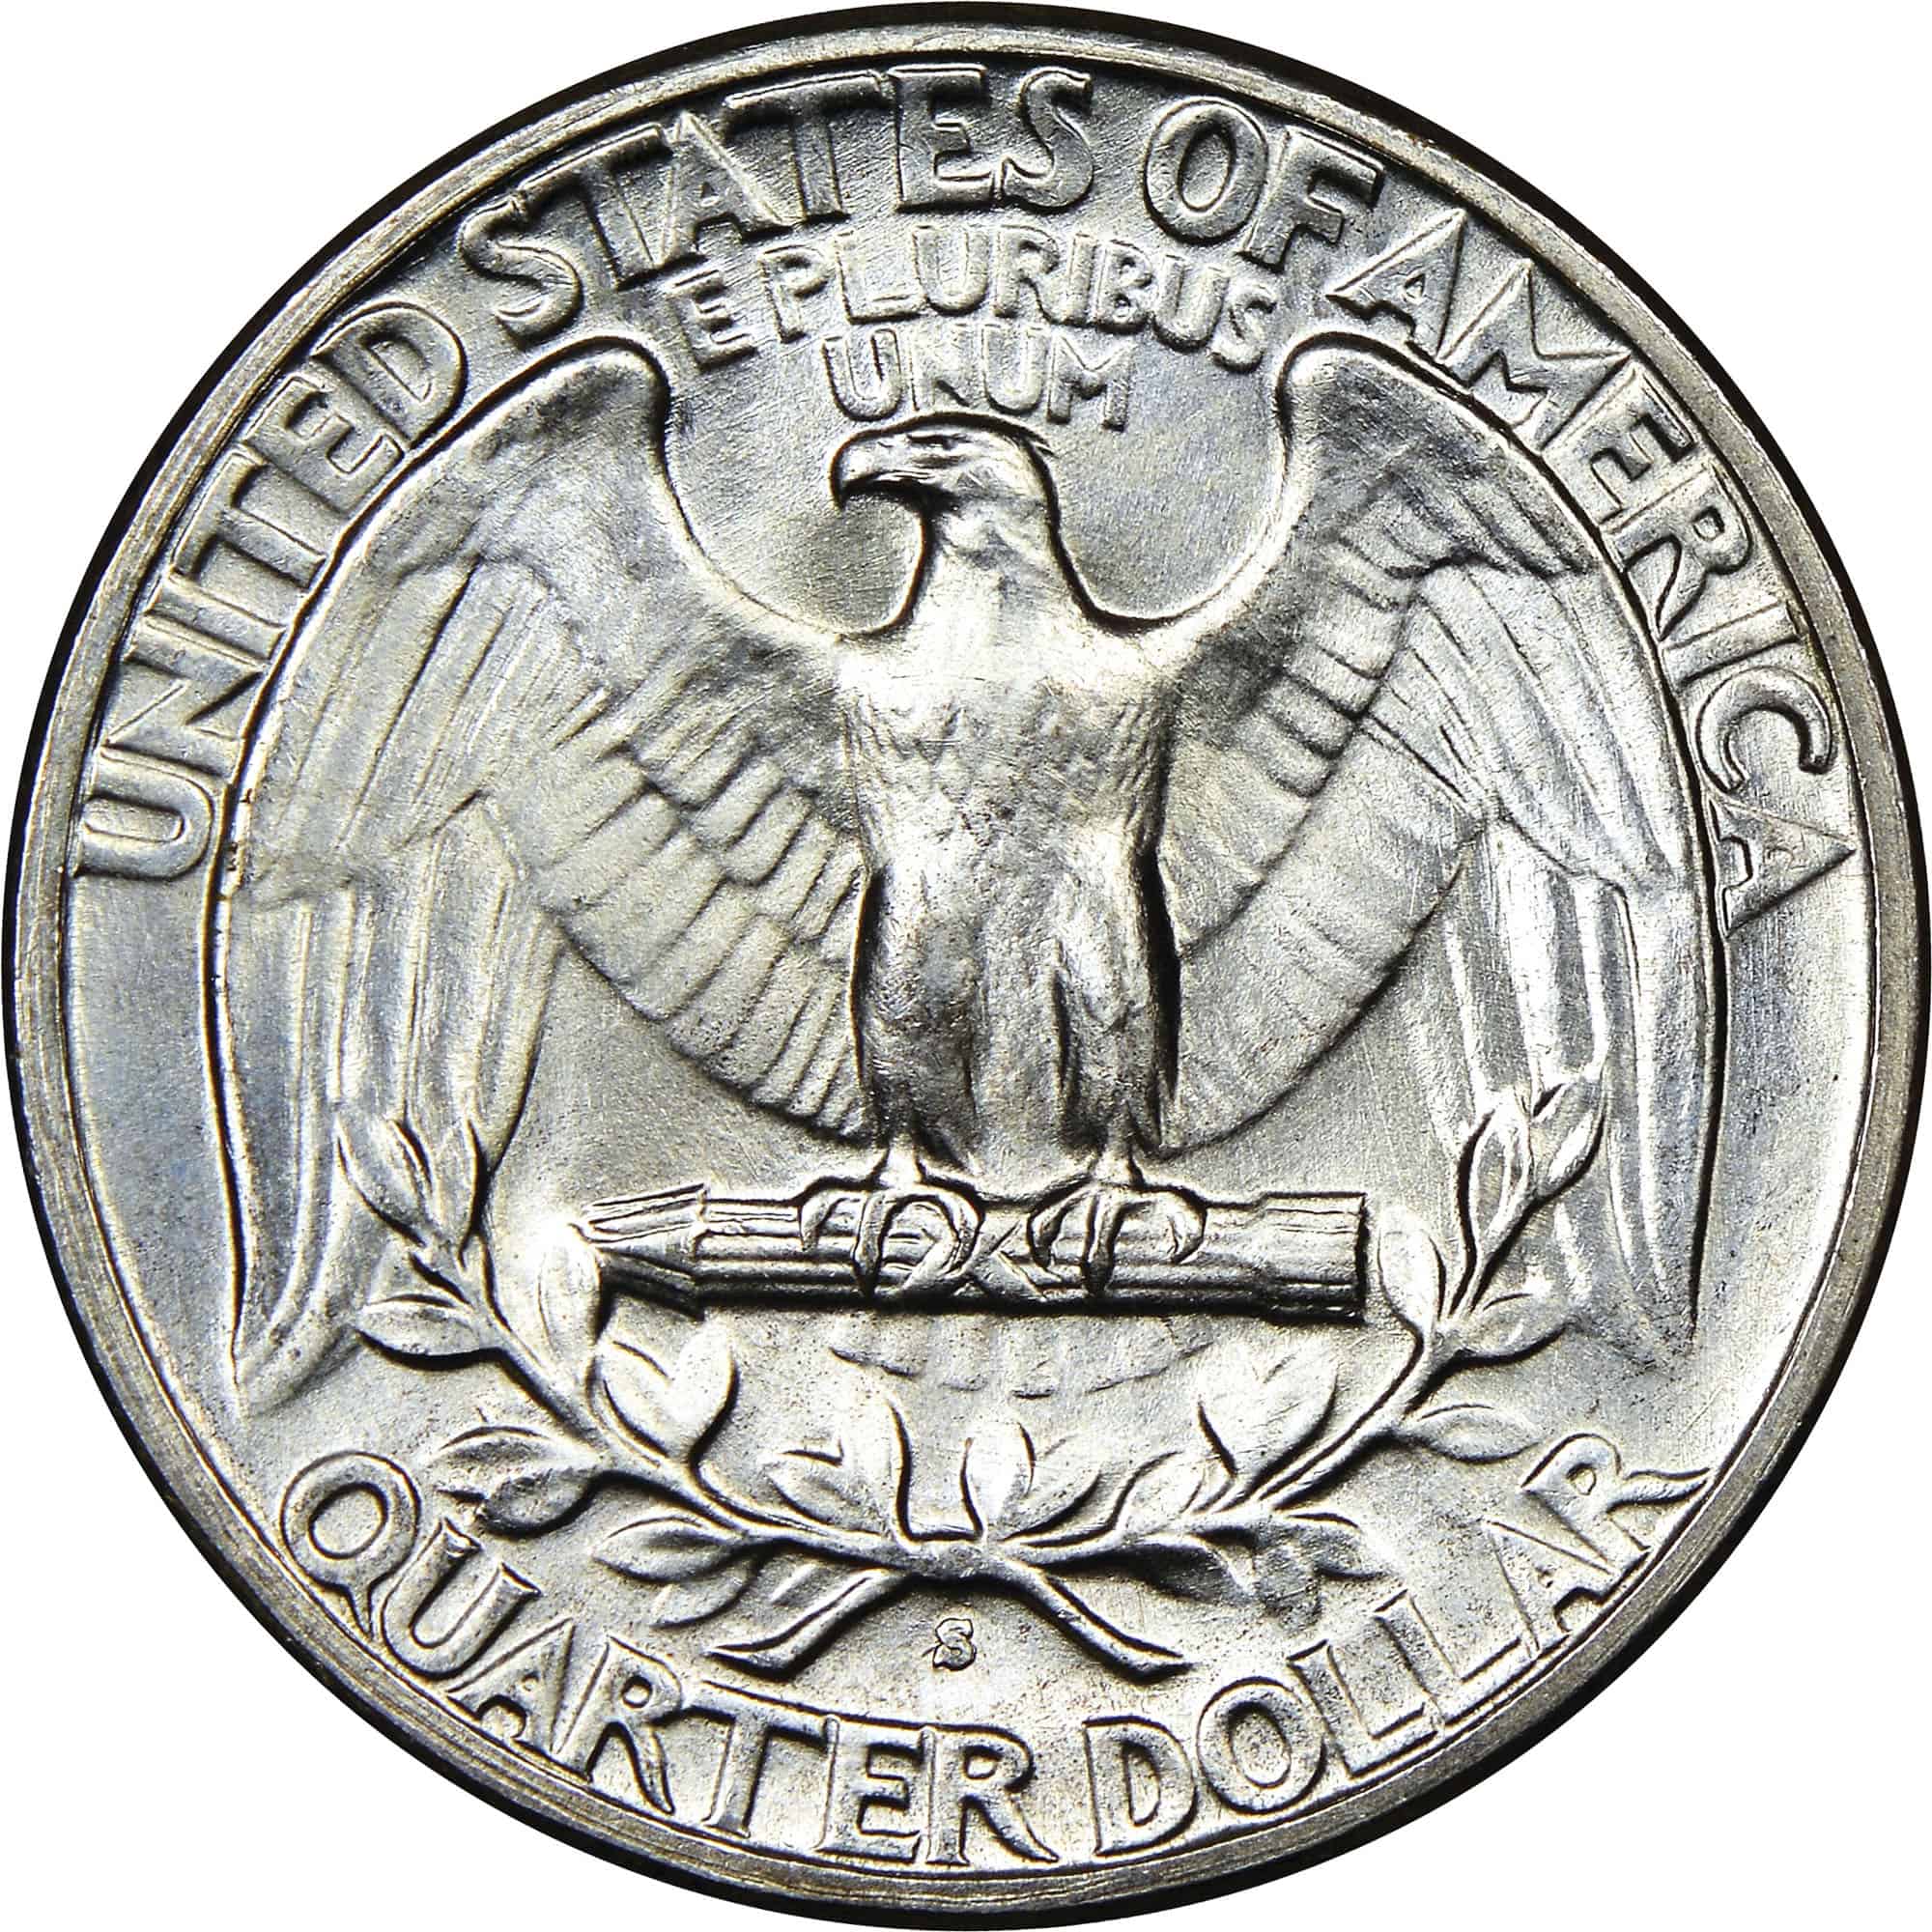 The Reverse of the 1940 Quarter